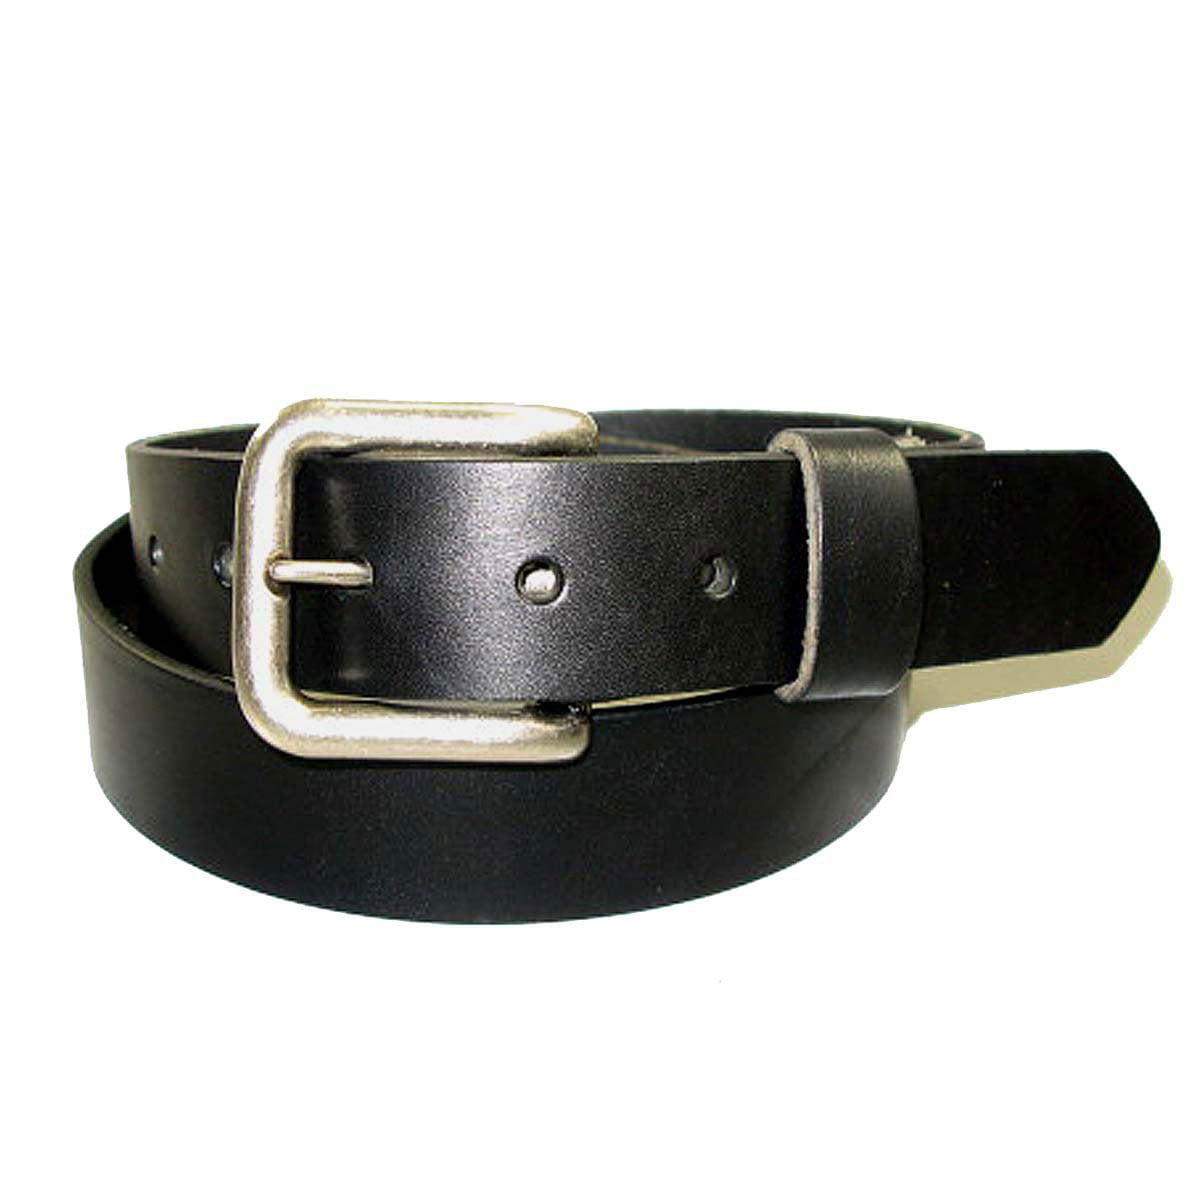 Italian Calfskin Leather Dress Belt 1-1/8" Wide with Gold Buckle The Adam 